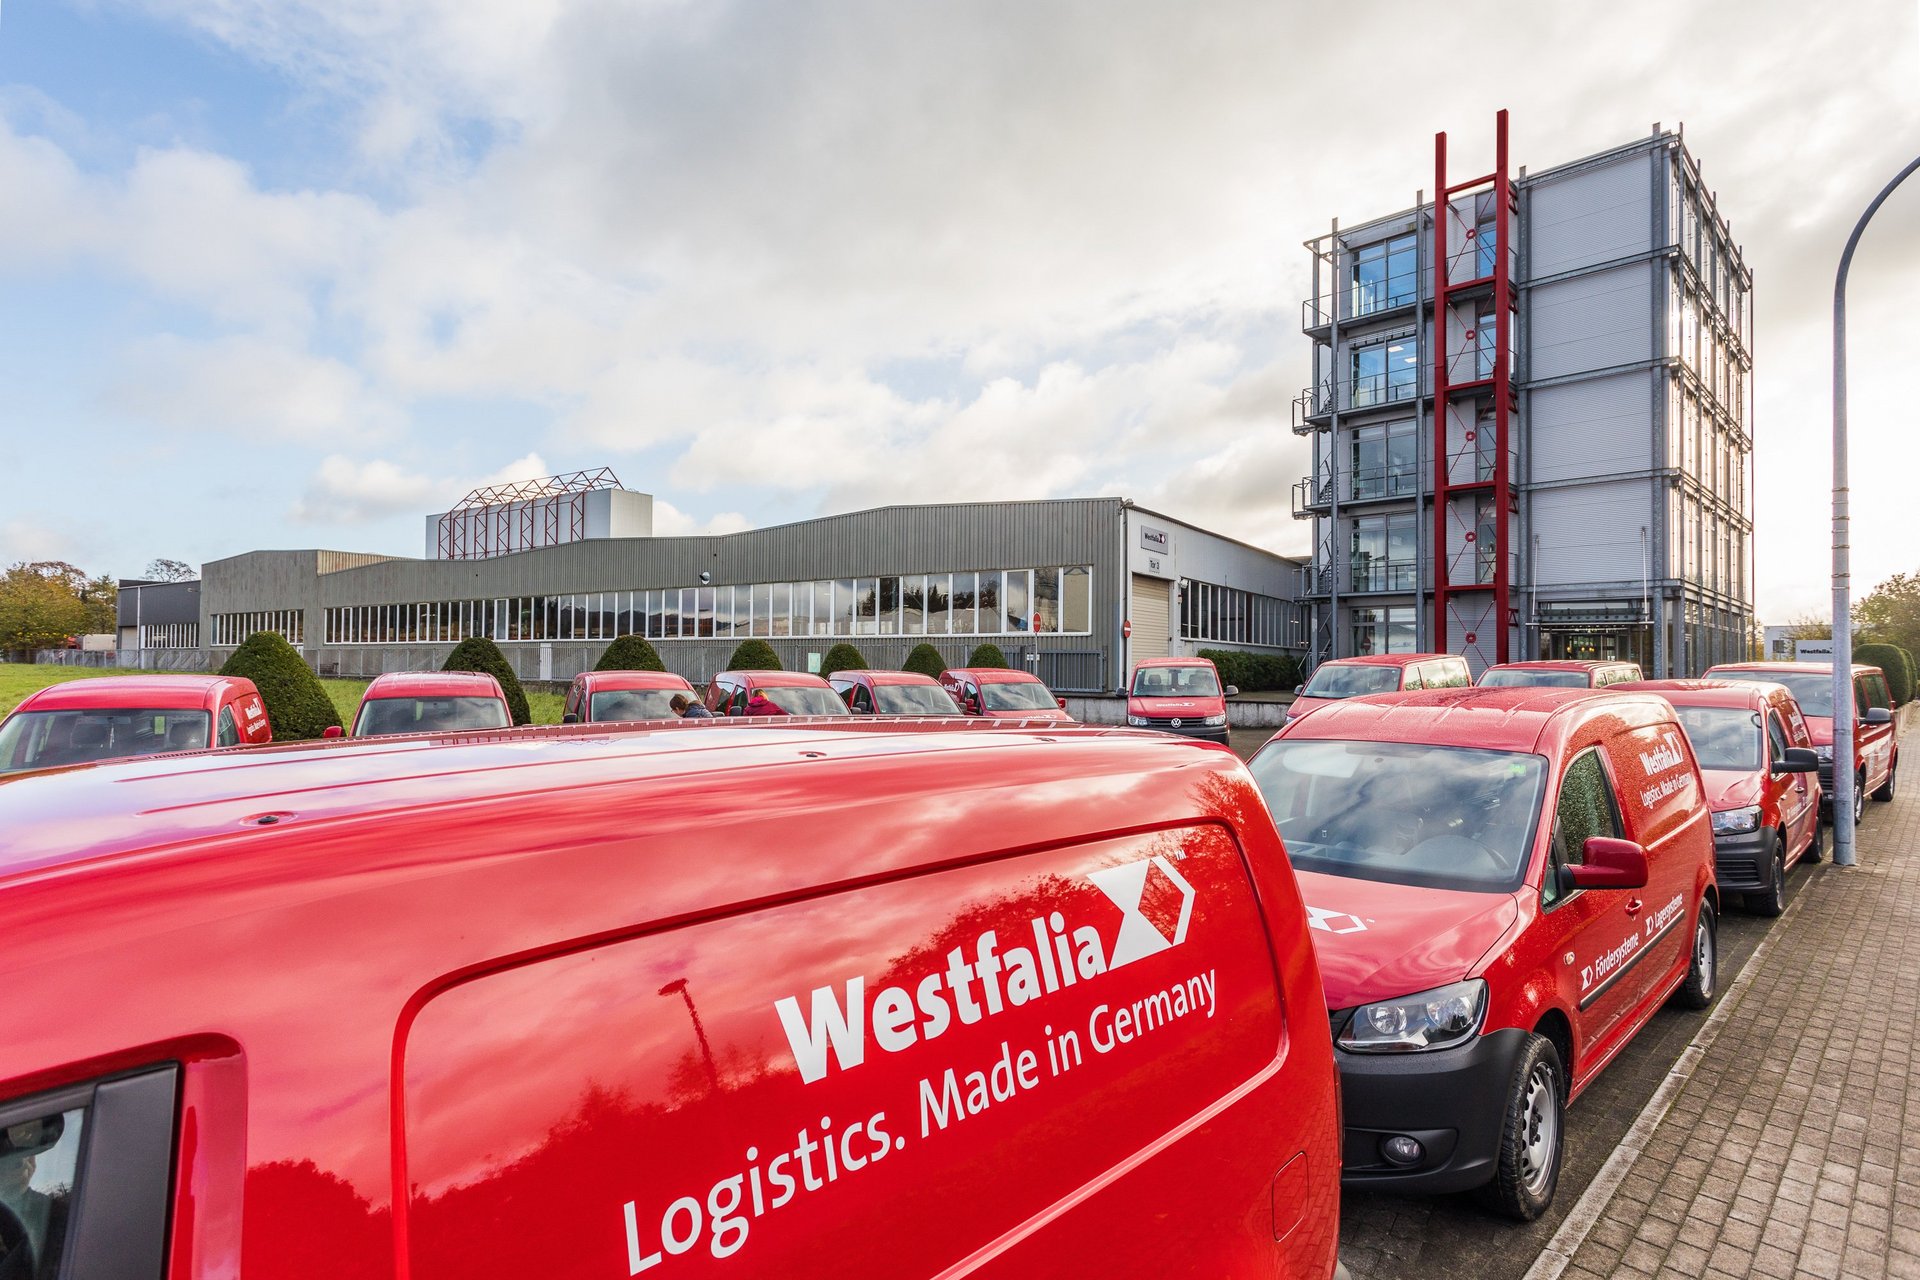 The red service vehicle fleet of Westfalia Technologies GmbH & Co. KG